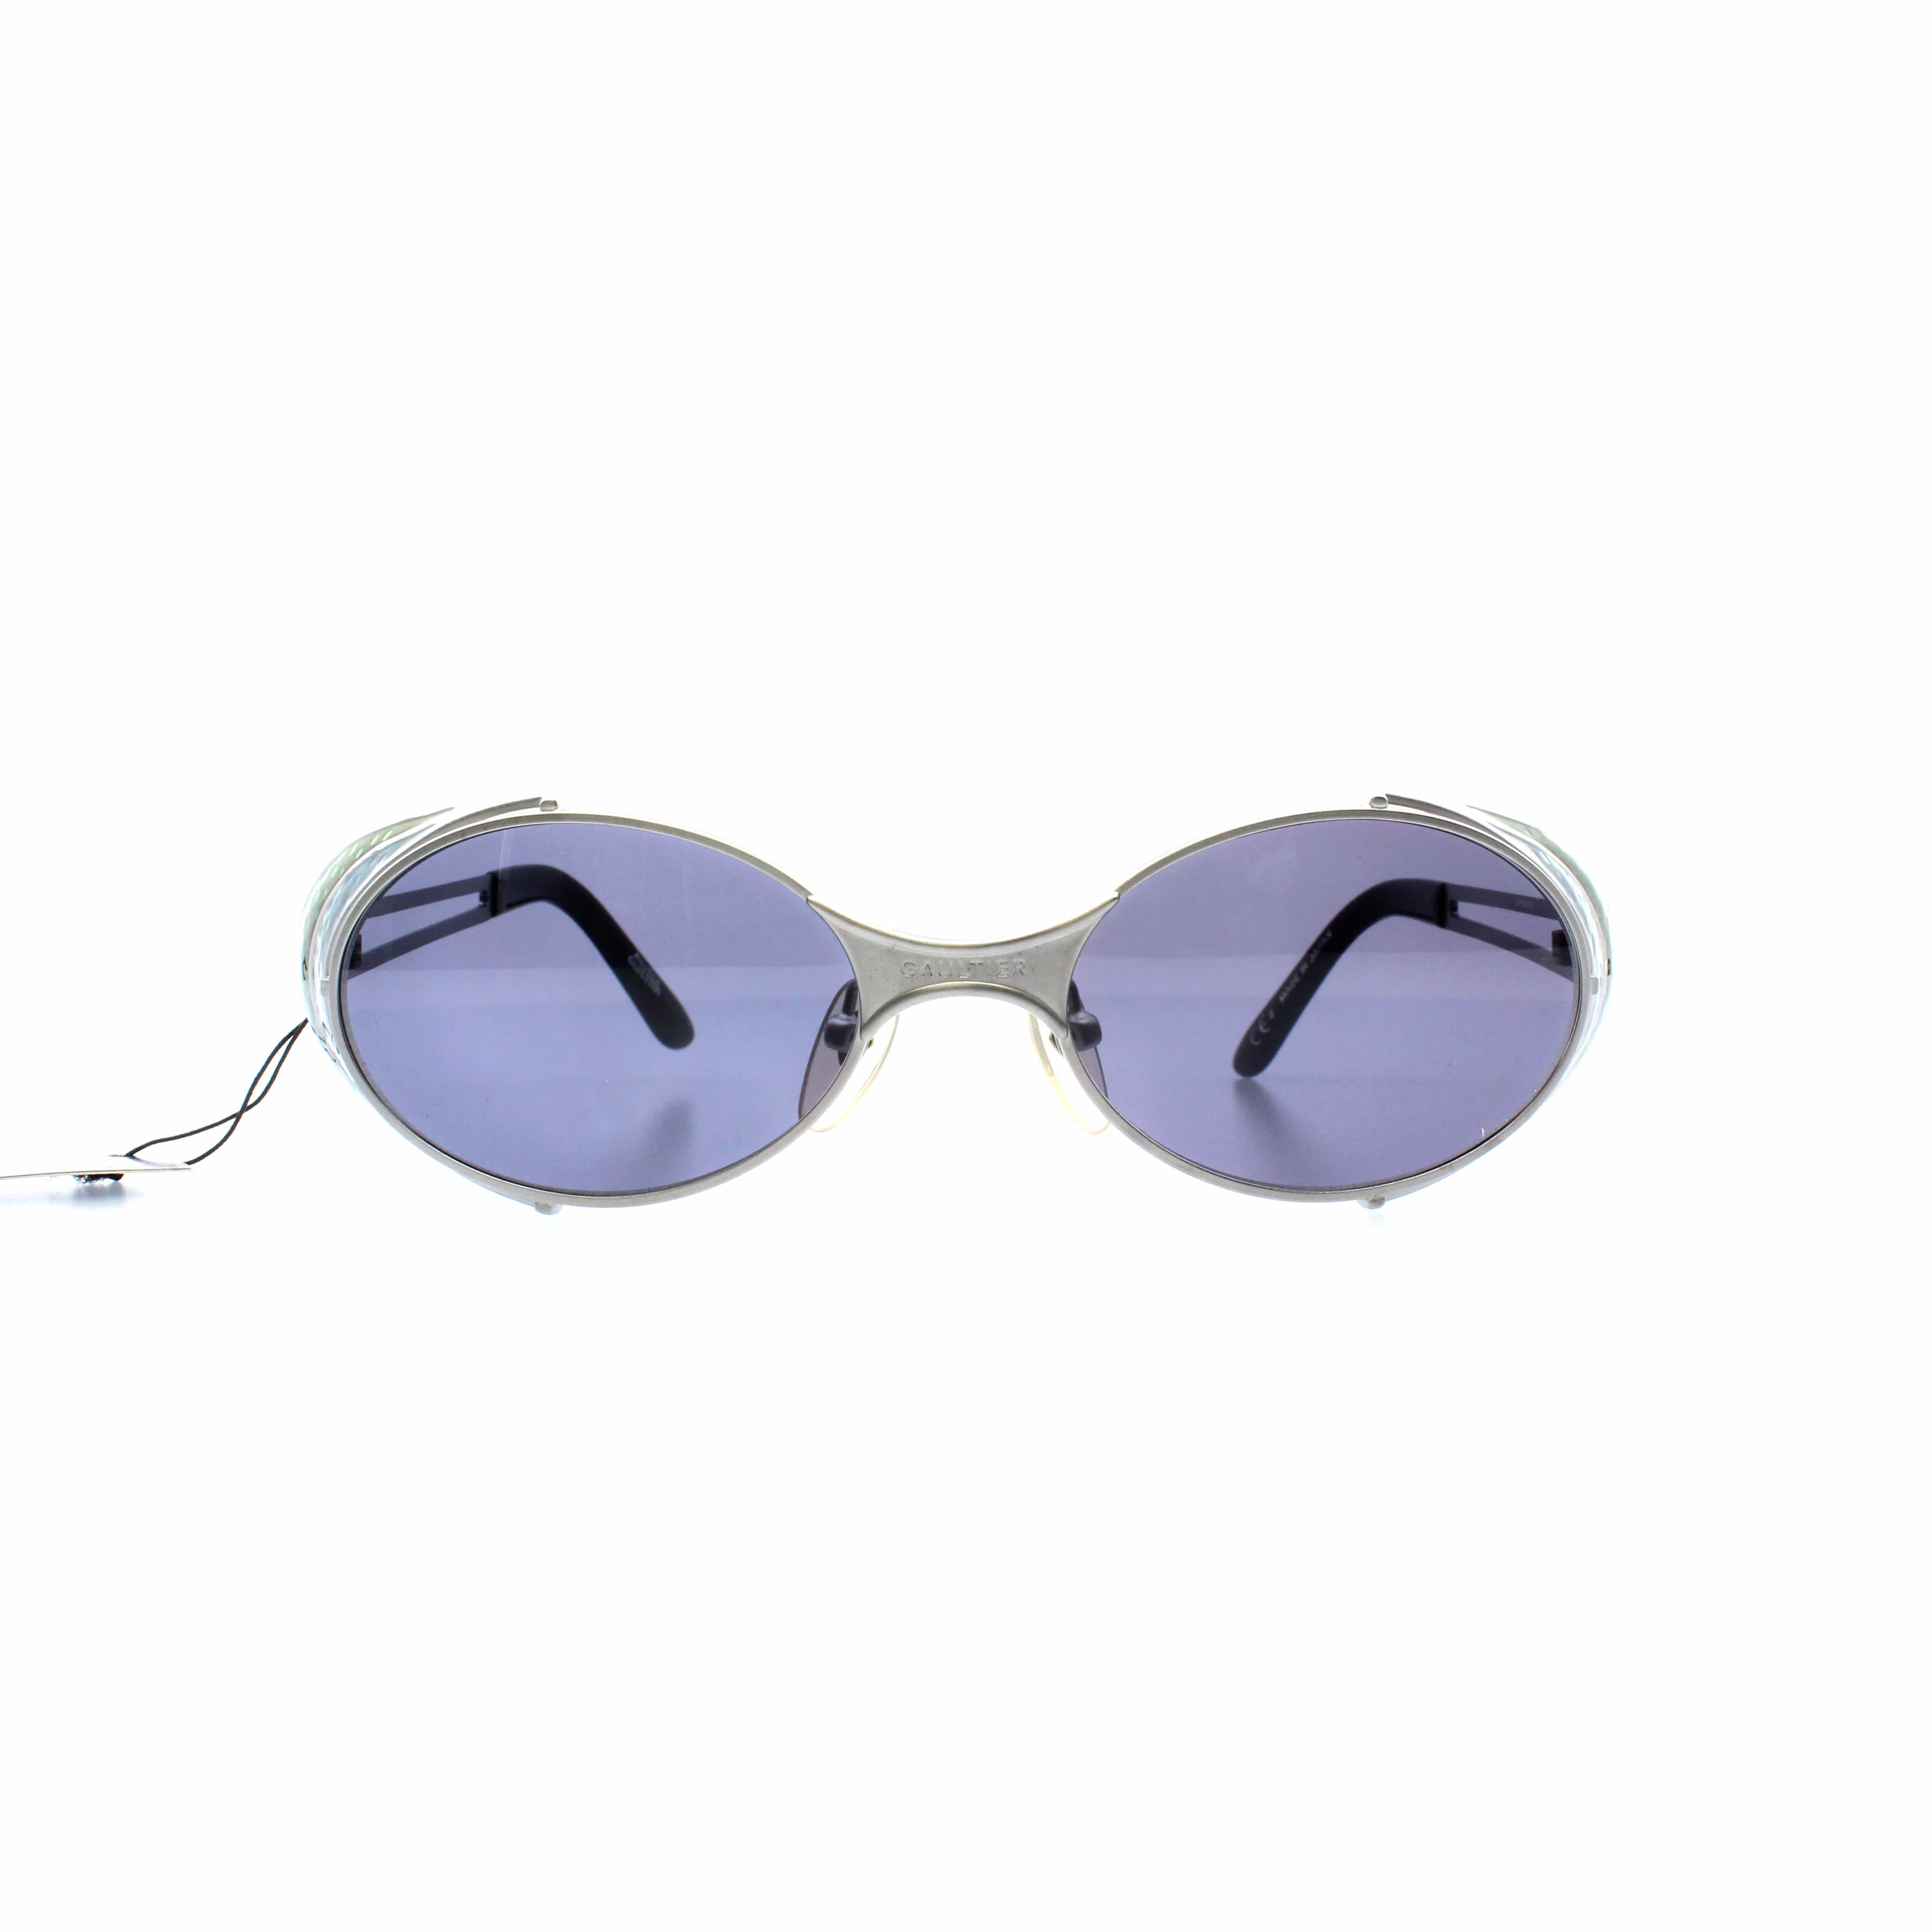 Silver Vintage Jean Paul Gaultier 56-7109 Sunglasses